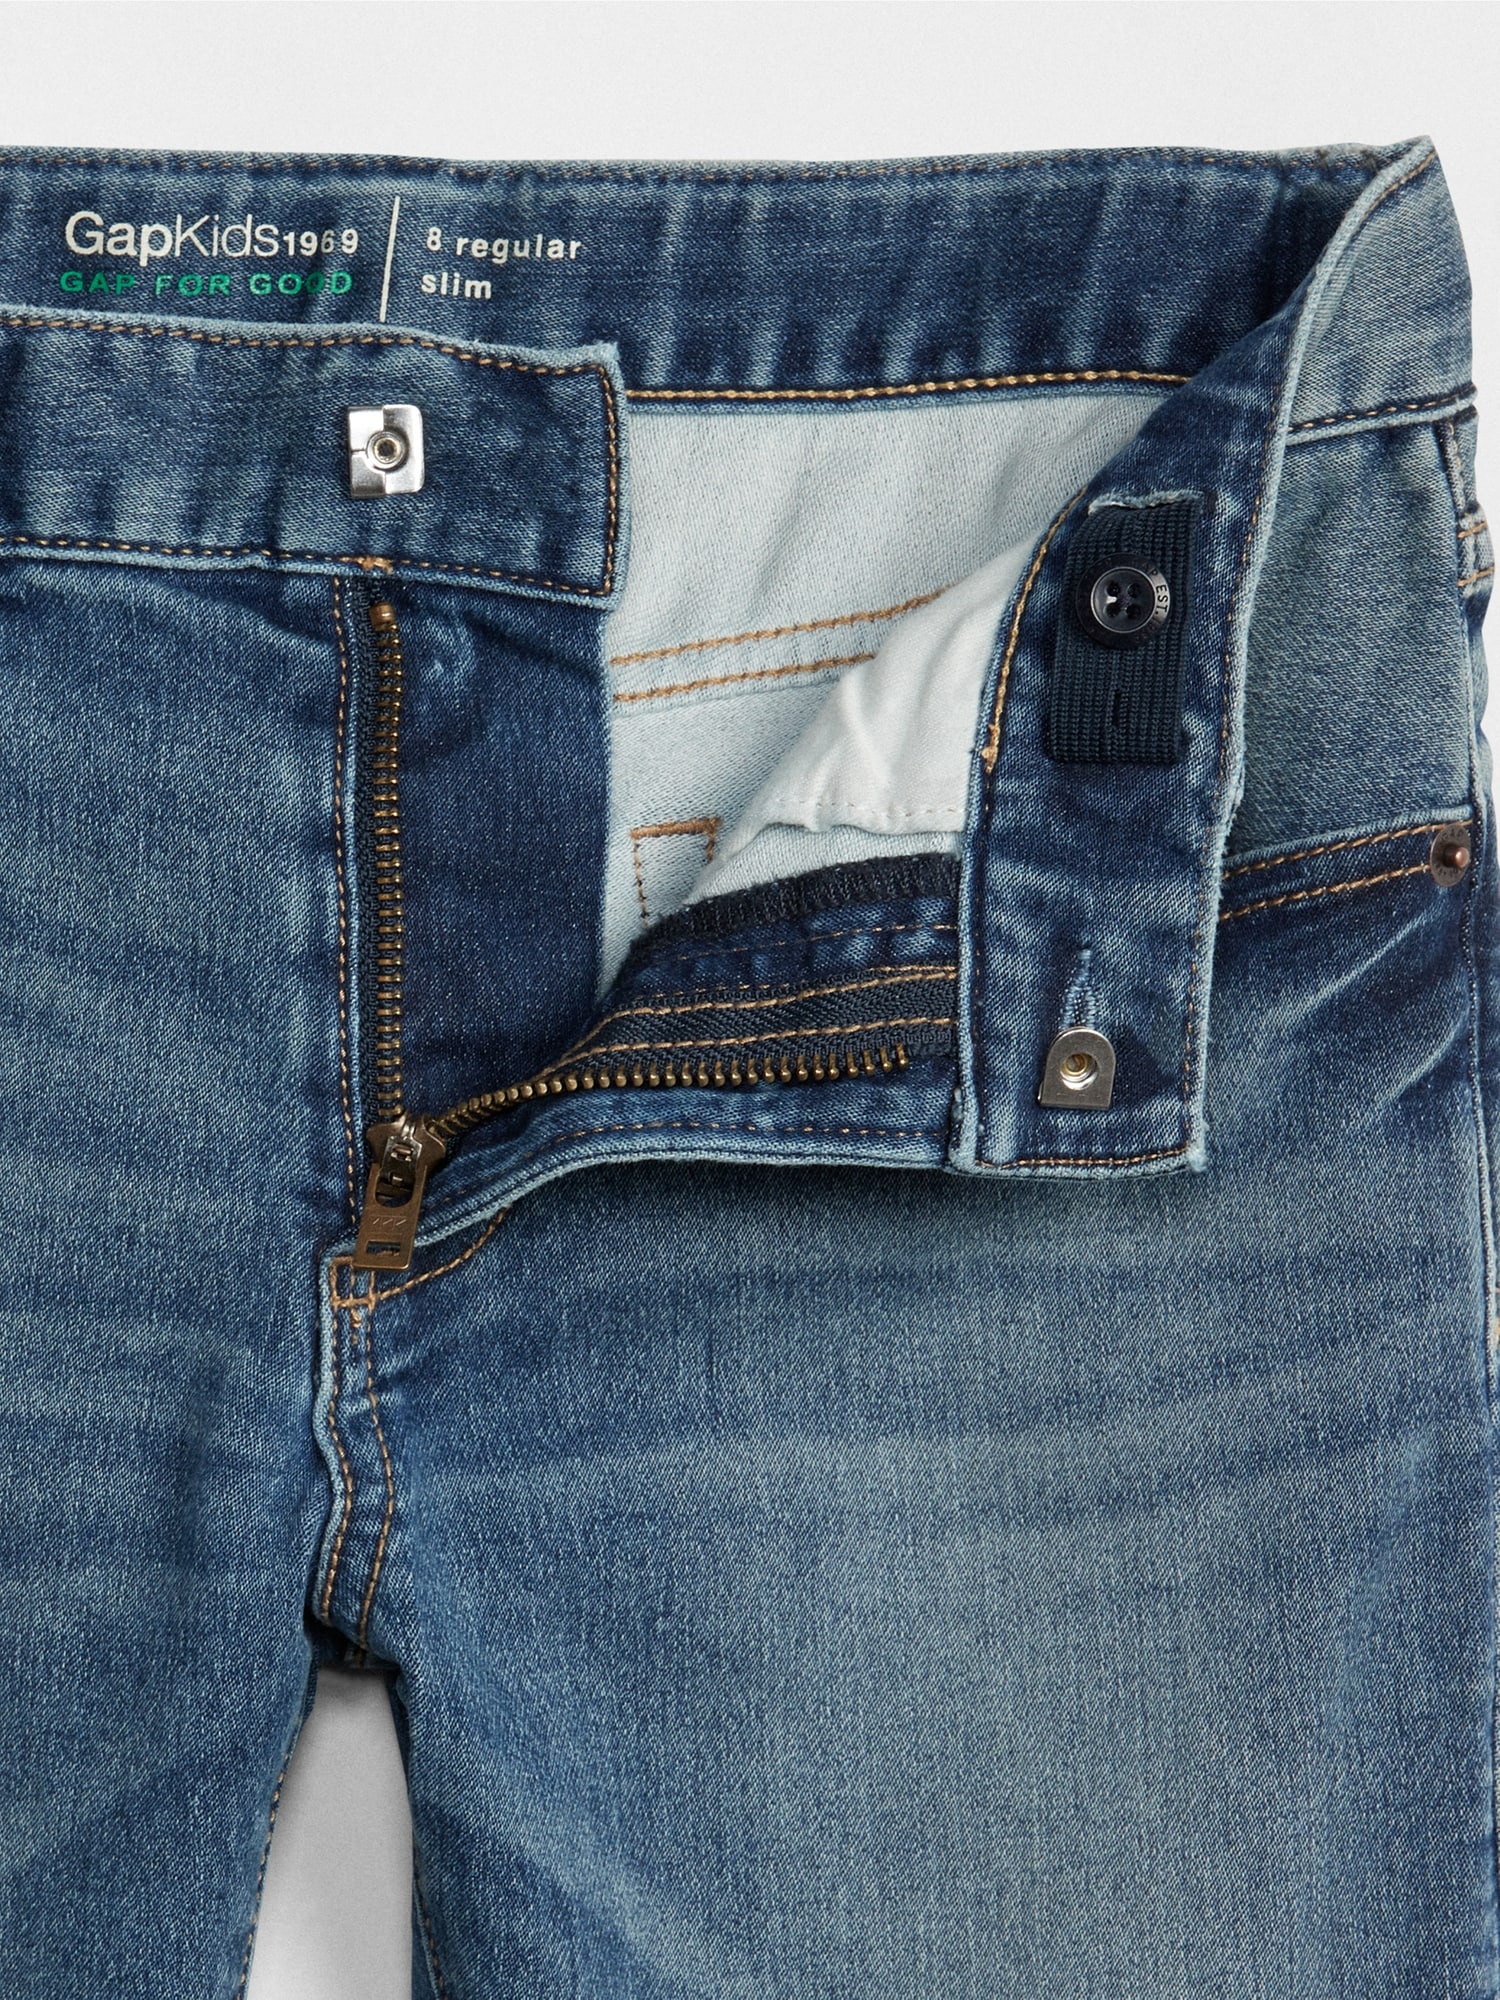 Huh leiderschap efficiënt Kids Slim Jeans with Washwell™ | Gap